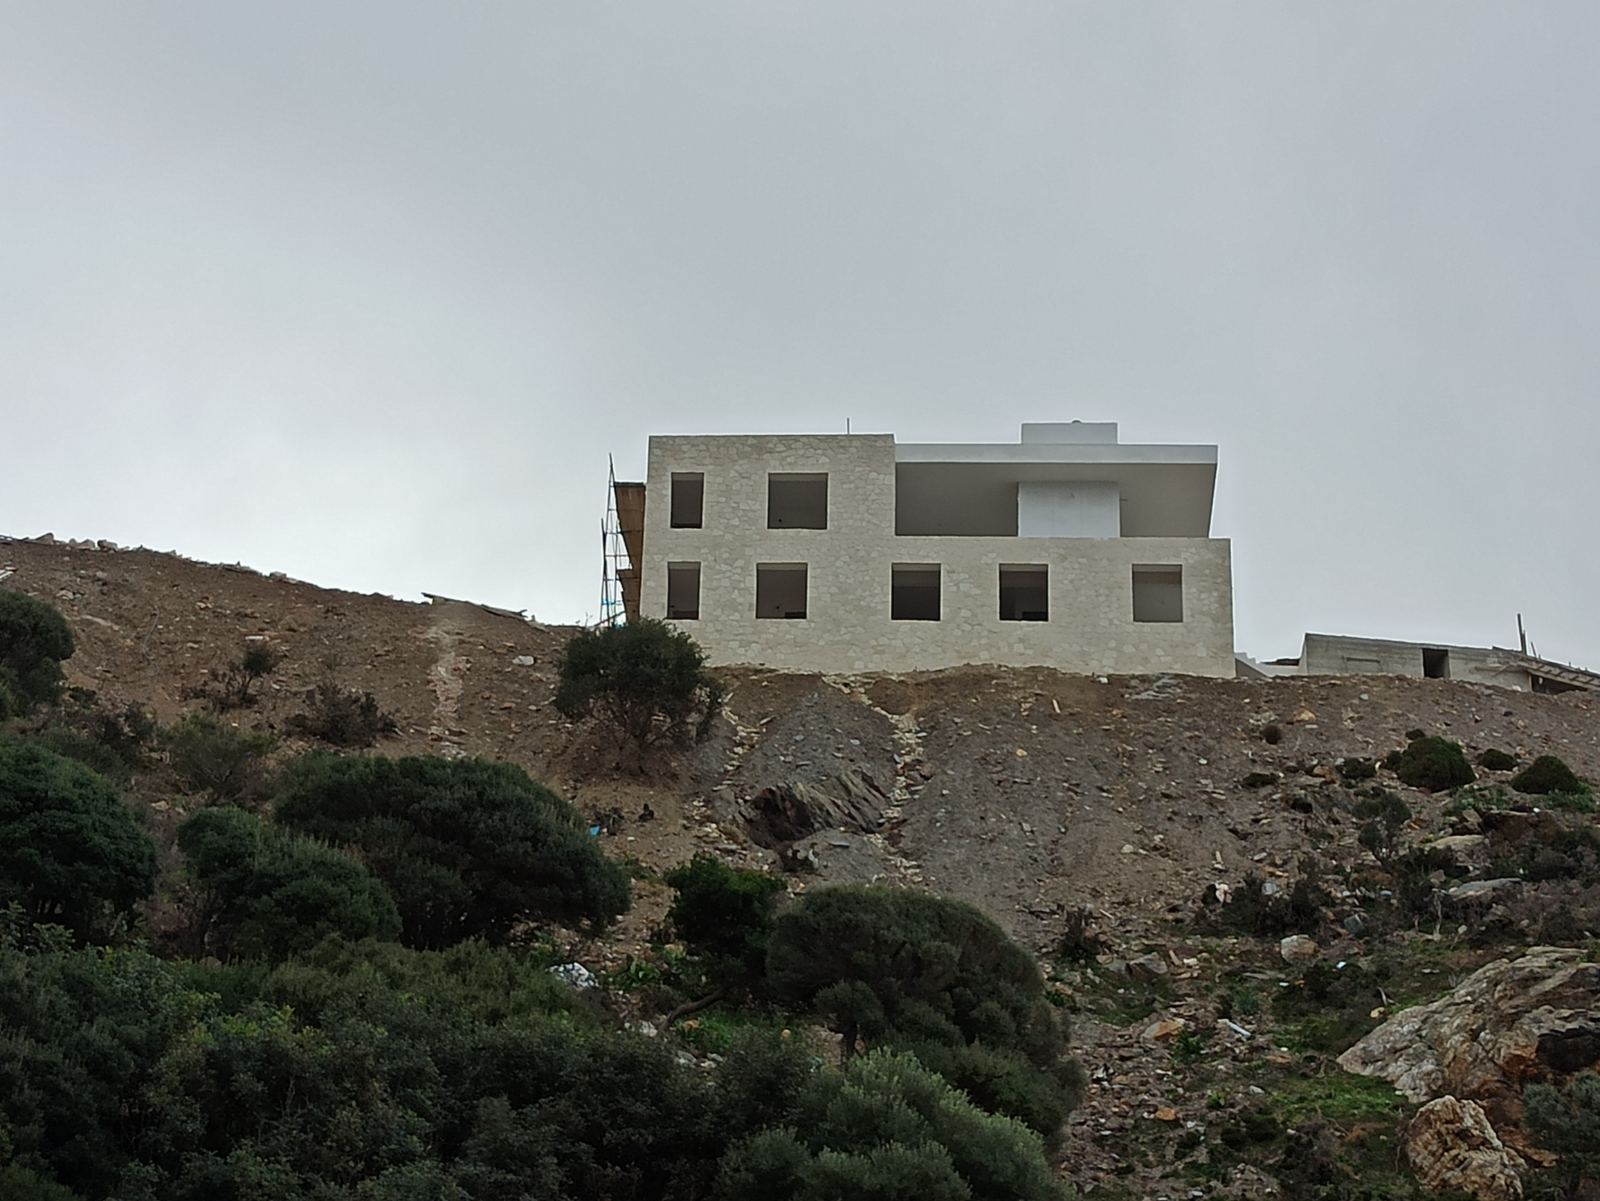 House on the Rocks